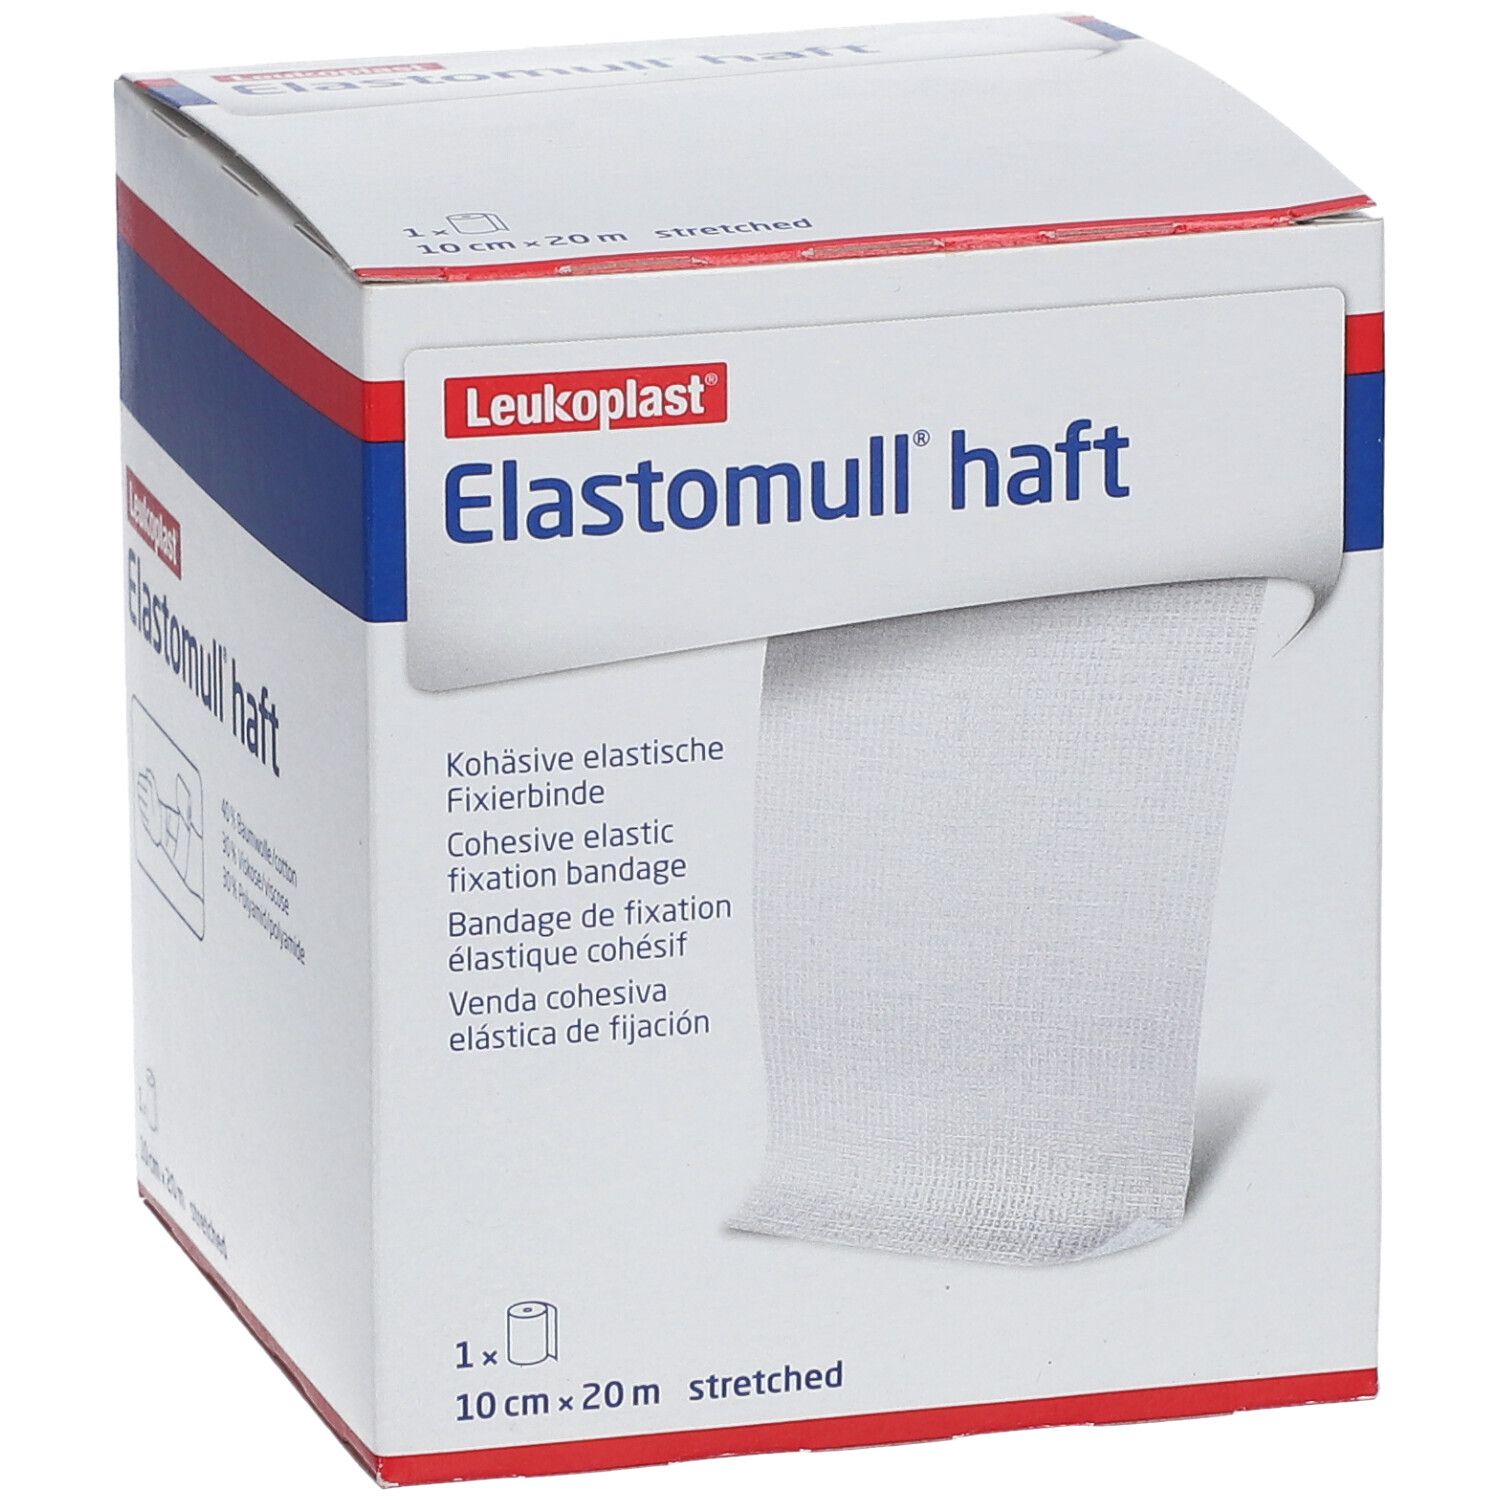 Elastomull® haft kohäsive elastische Fixierbinde 10 cm x 20 m